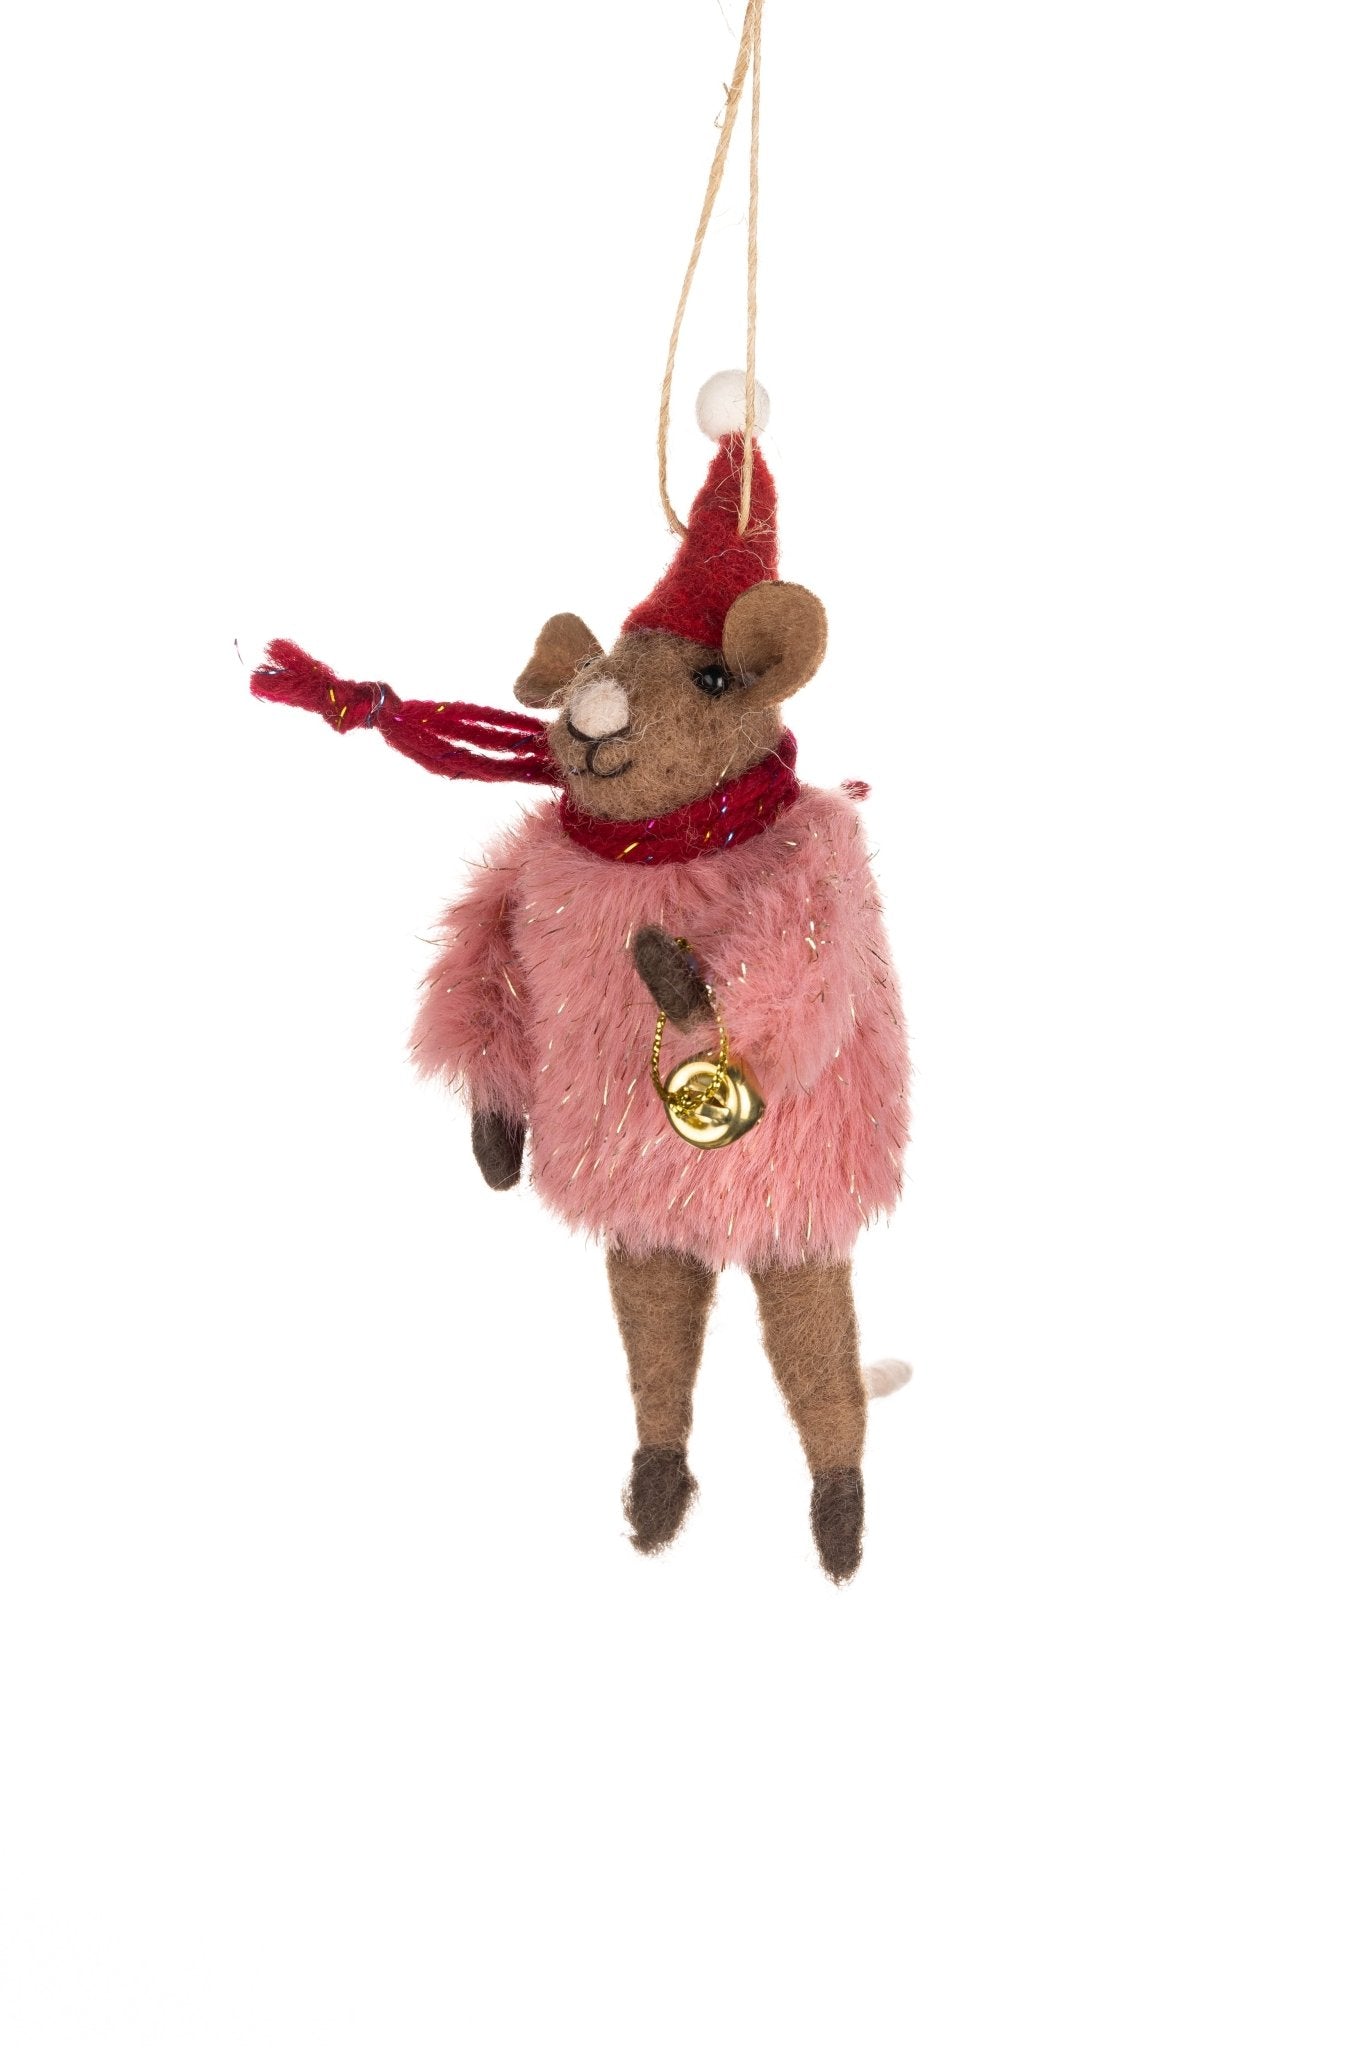 Fluffy Pink Jumper Mouse - The Nancy Smillie Shop - Art, Jewellery & Designer Gifts Glasgow